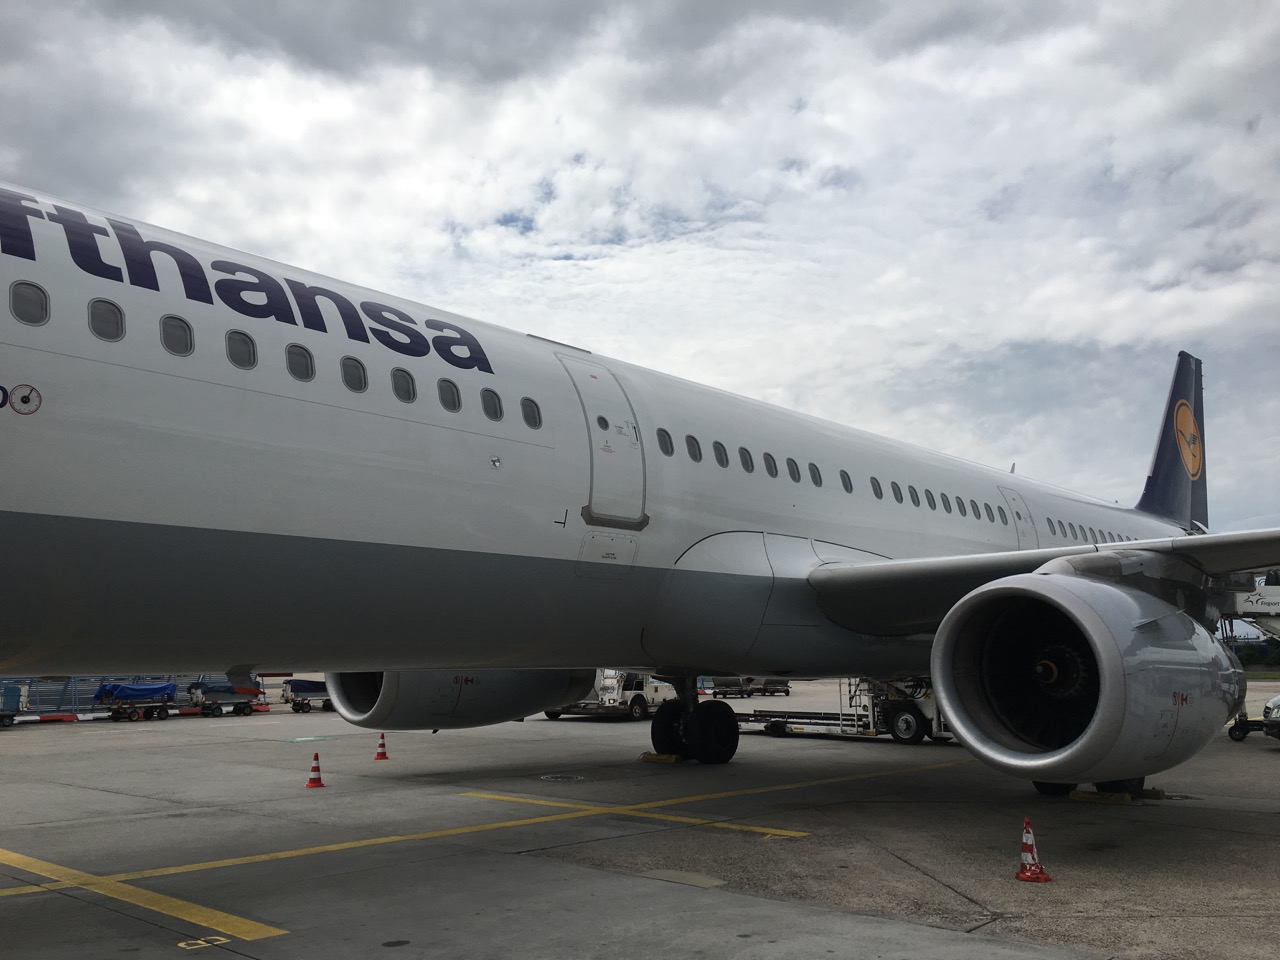 Lufthansa A321